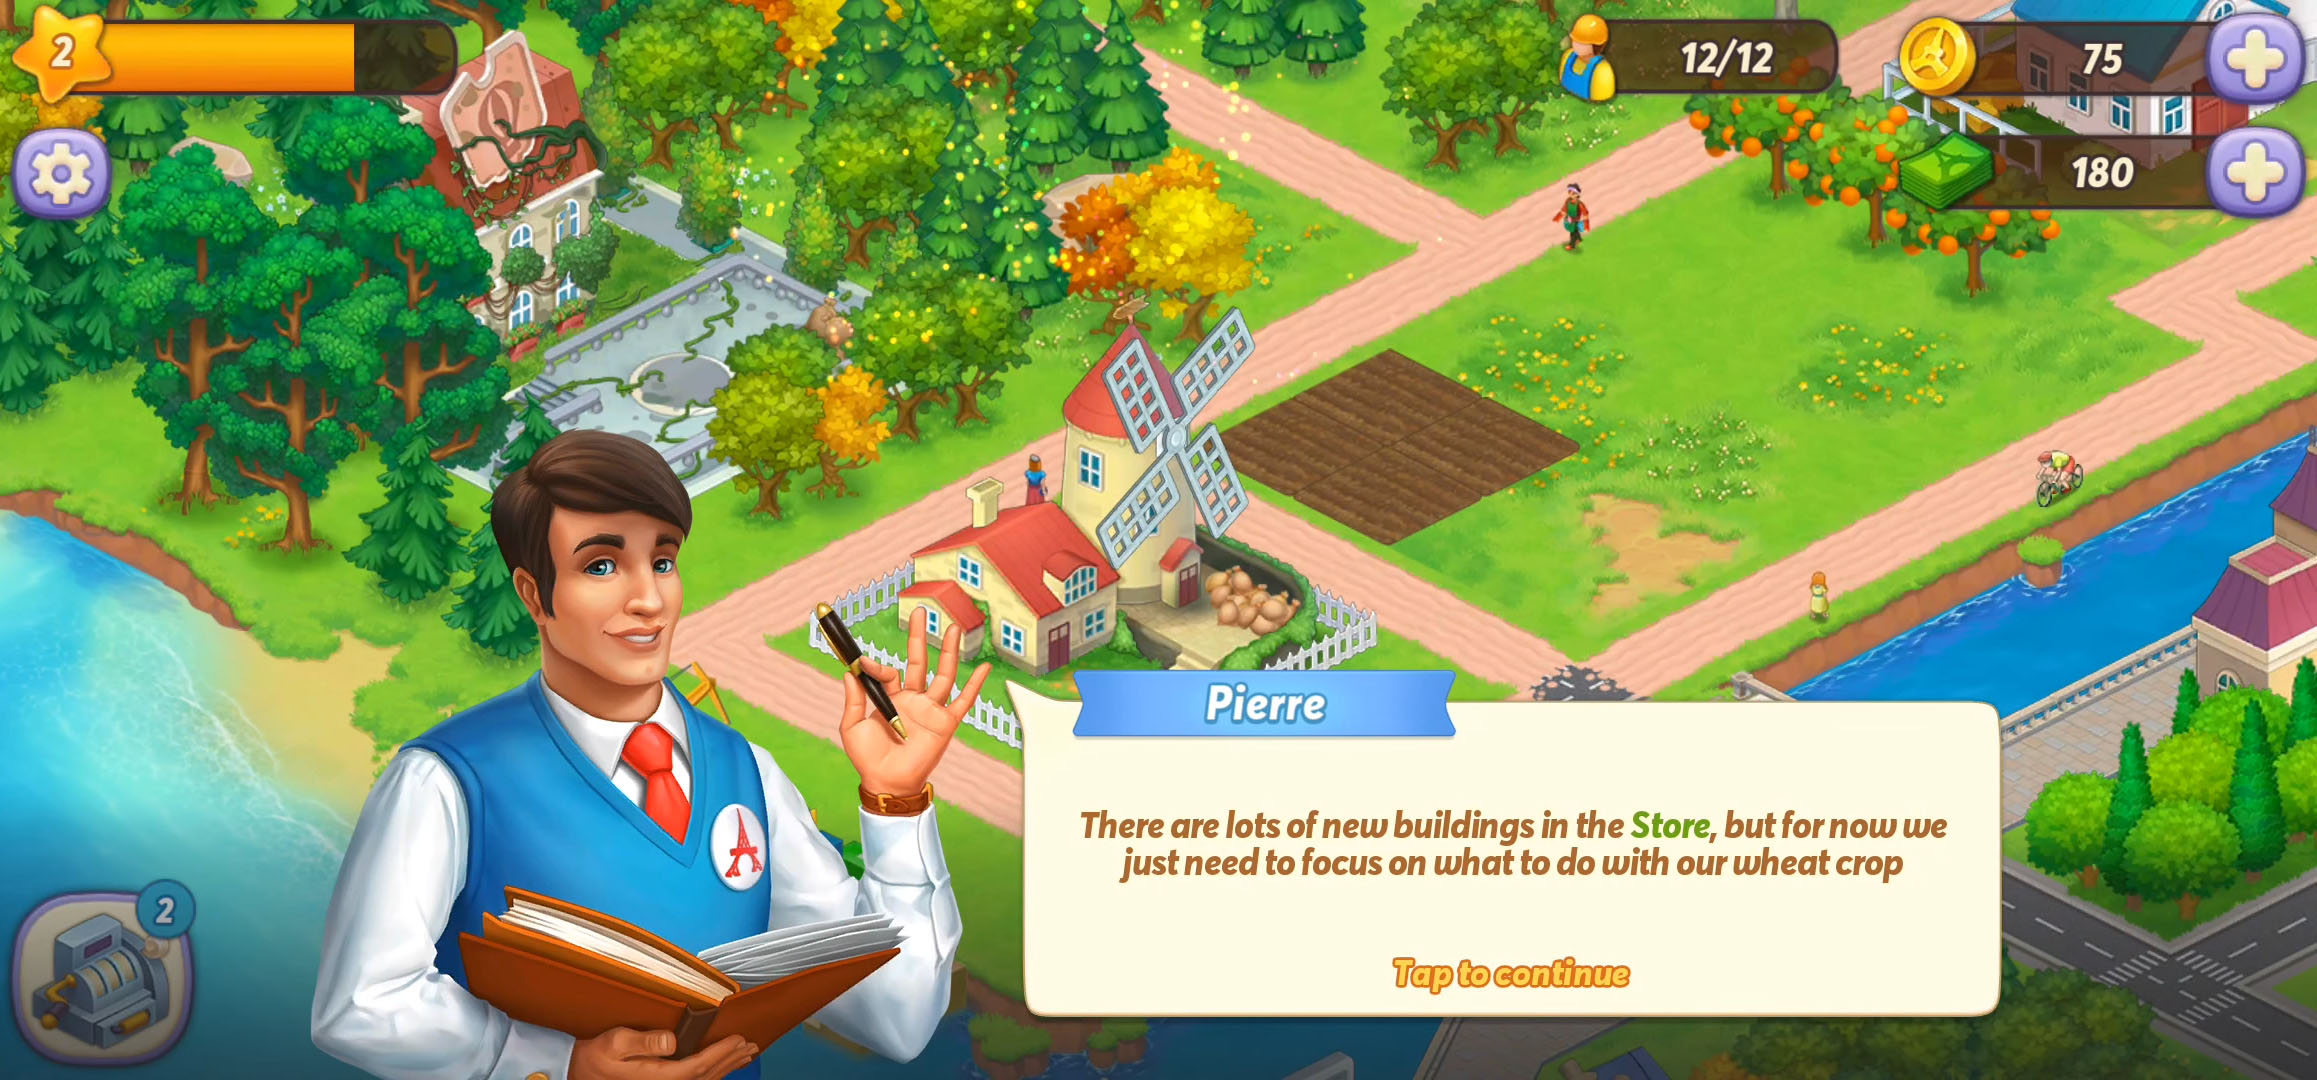 Paris: City Adventure - Android game screenshots.